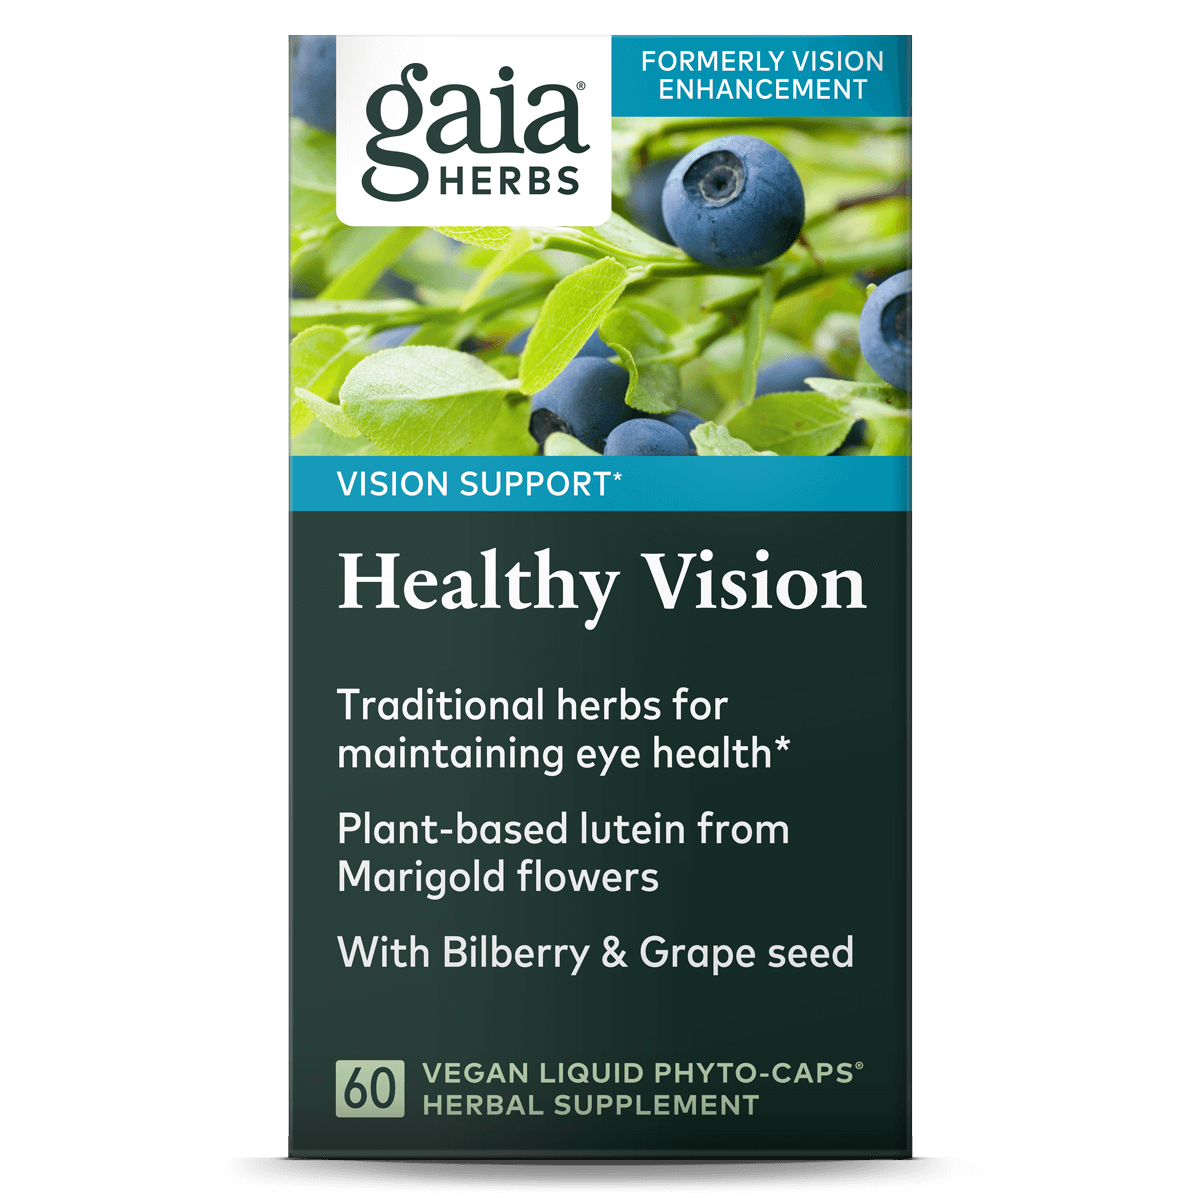 Gaia Herbs Healthy Vision label